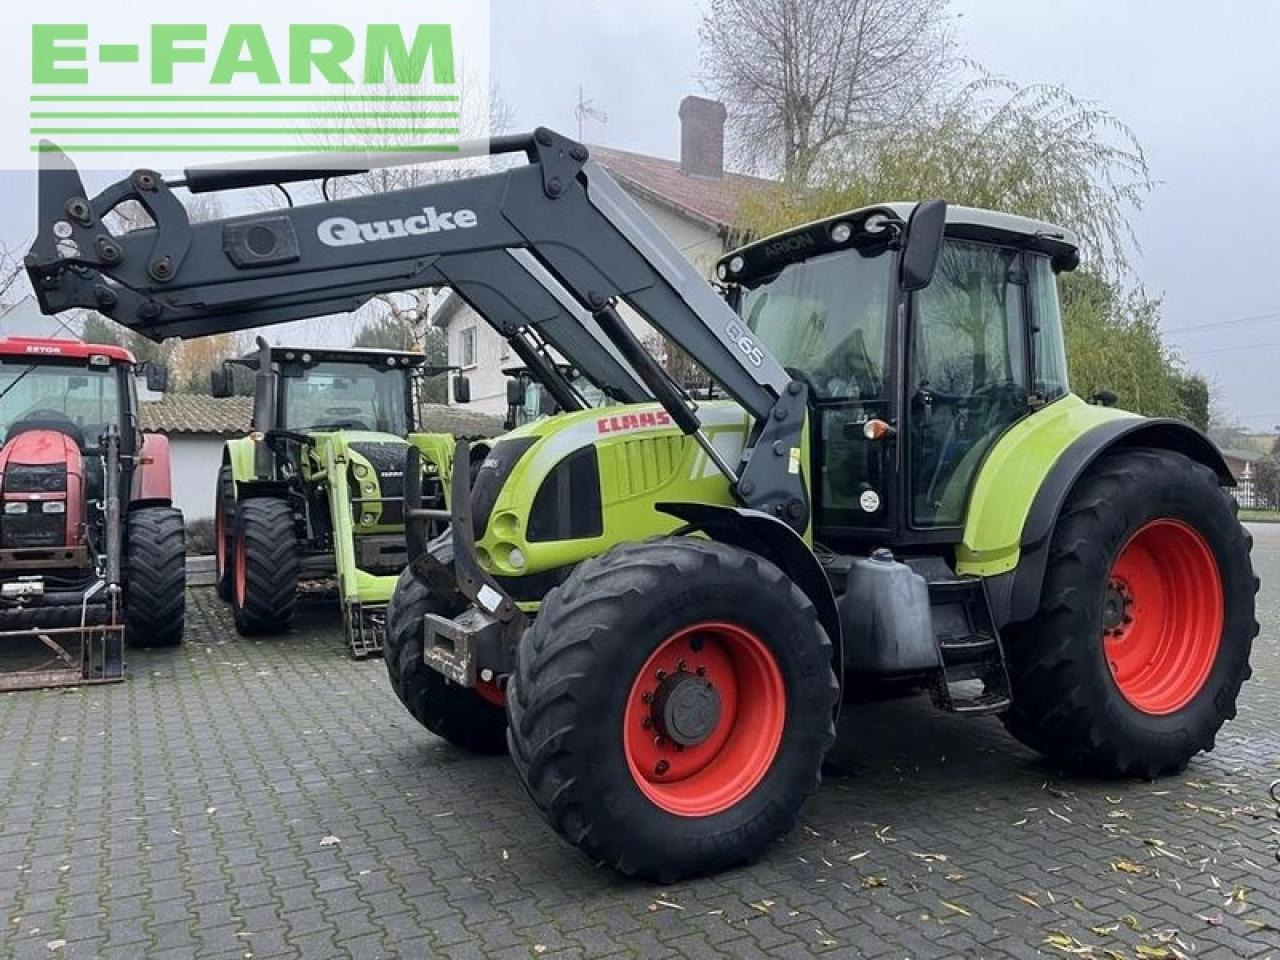 Tracteur agricole CLAAS arion 640 cis + quicke q65